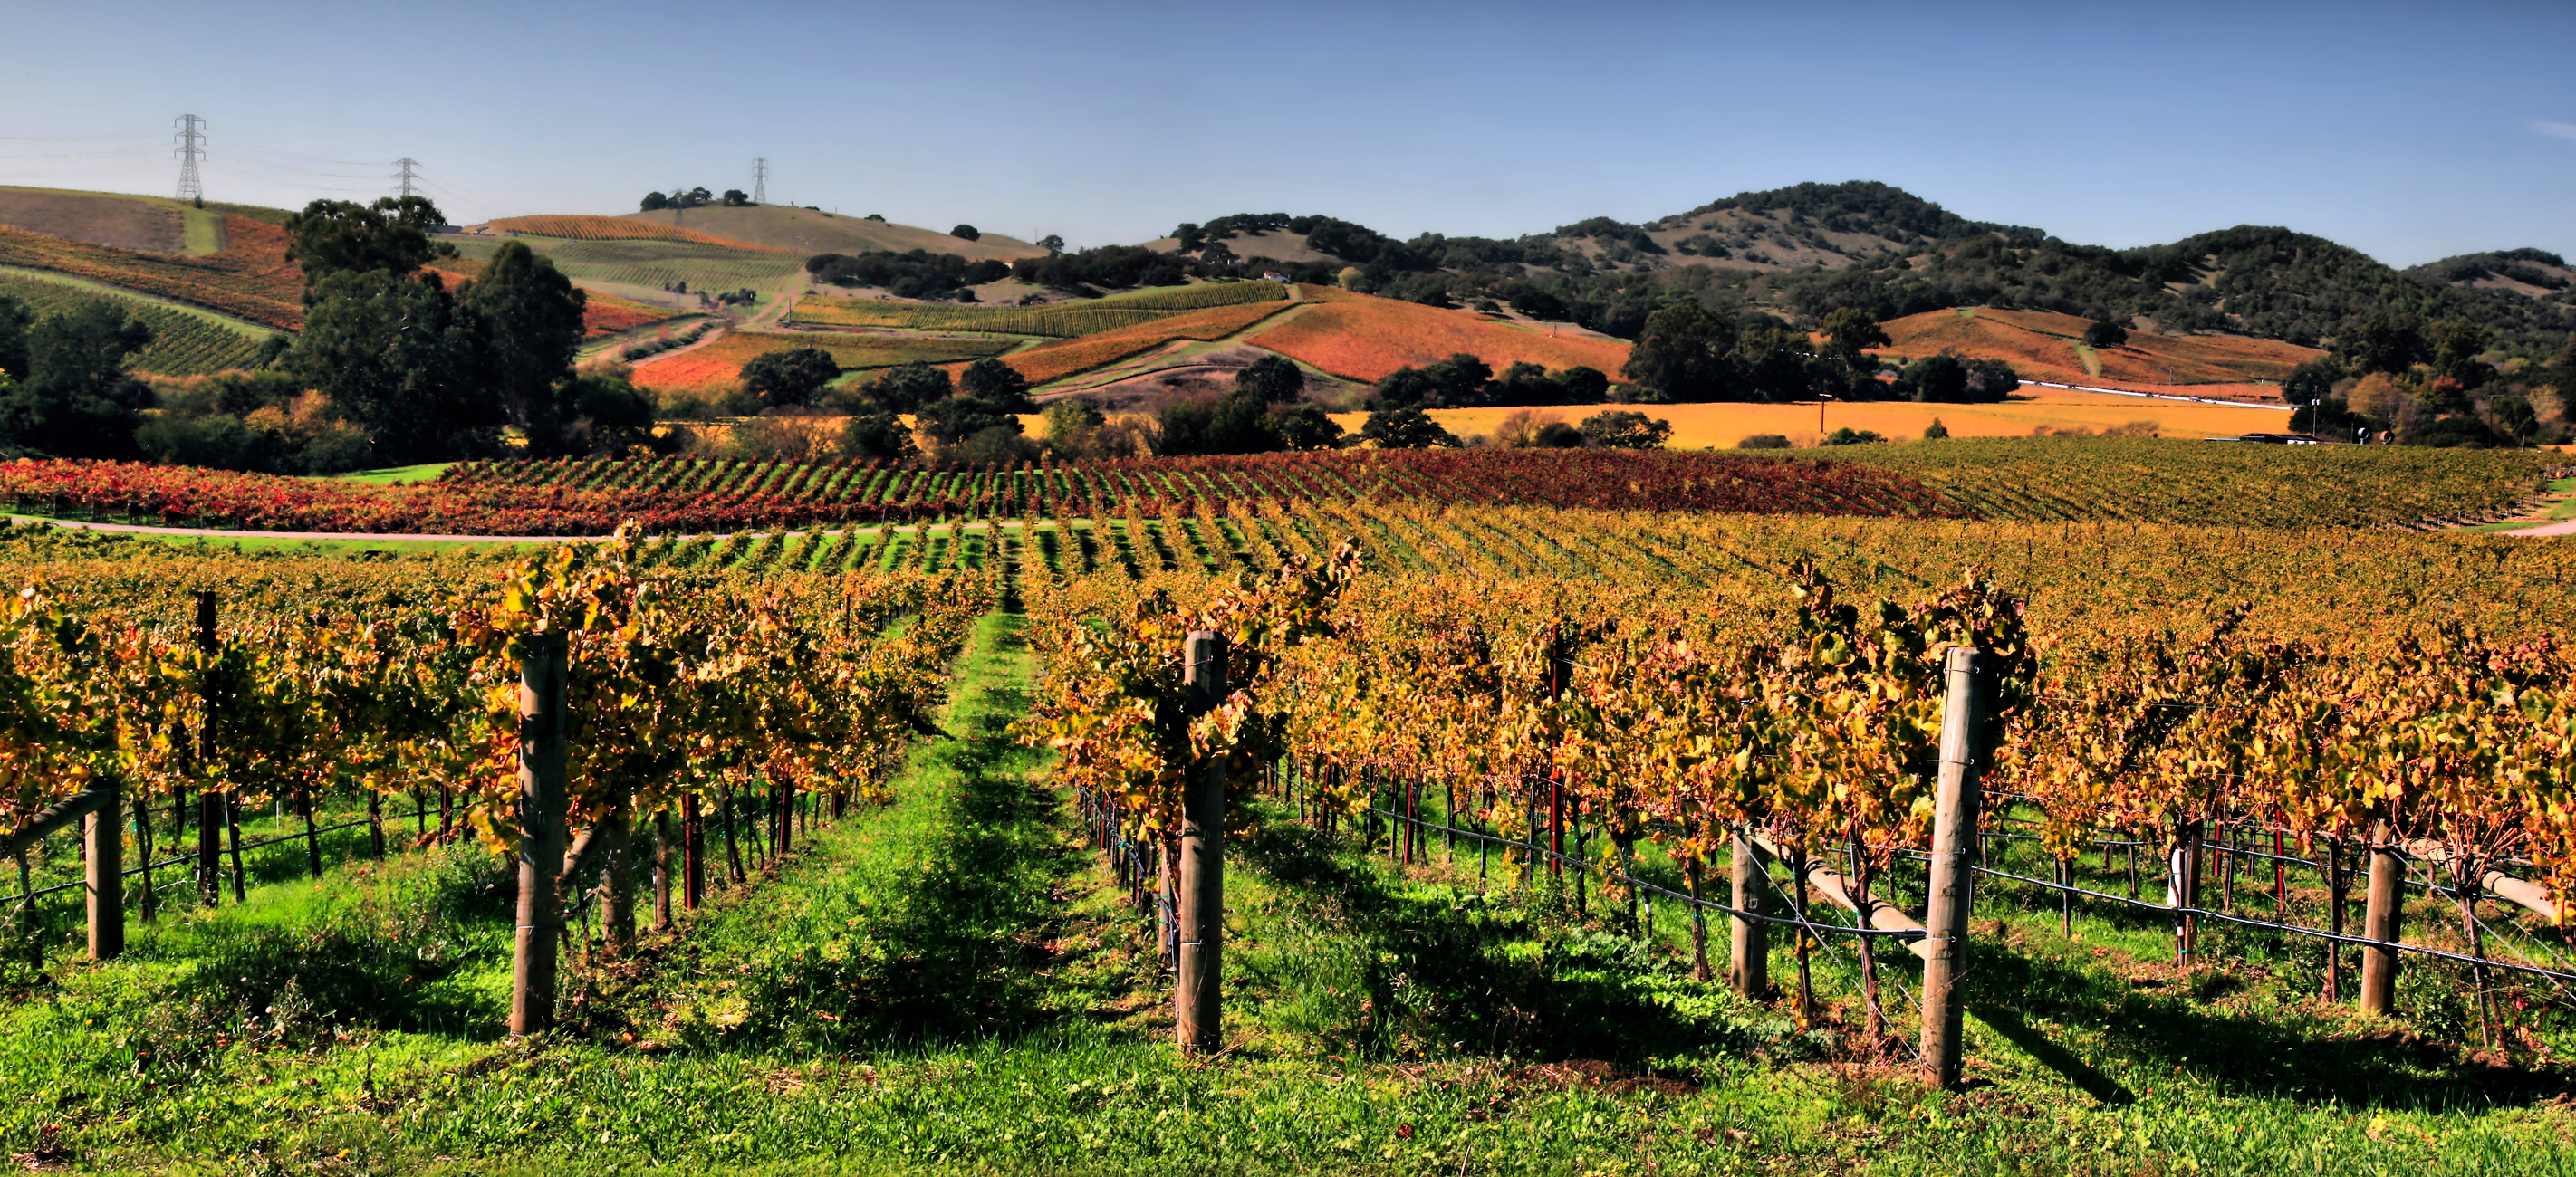 File:Vineyards in Napa Valley.jpg - Wikimedia Commons